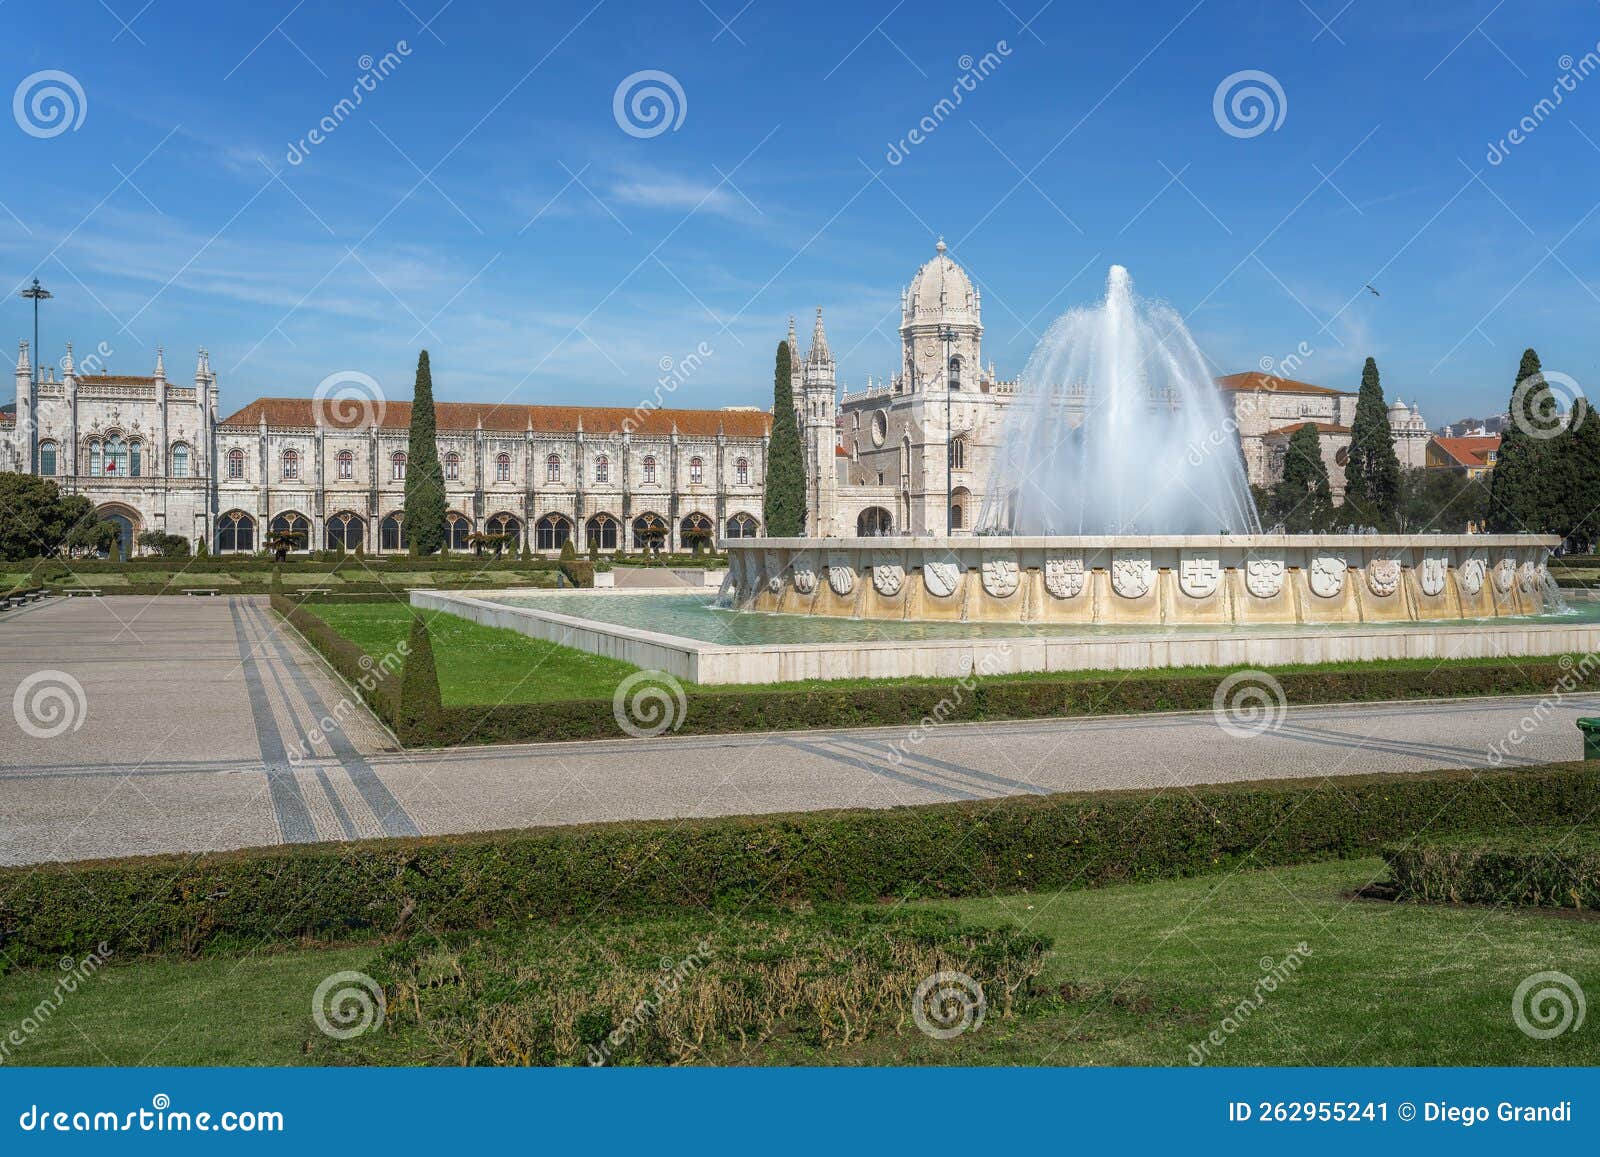 jardim da praca do imperio square with fountain and jeronimos monastery - lisbon, portugal